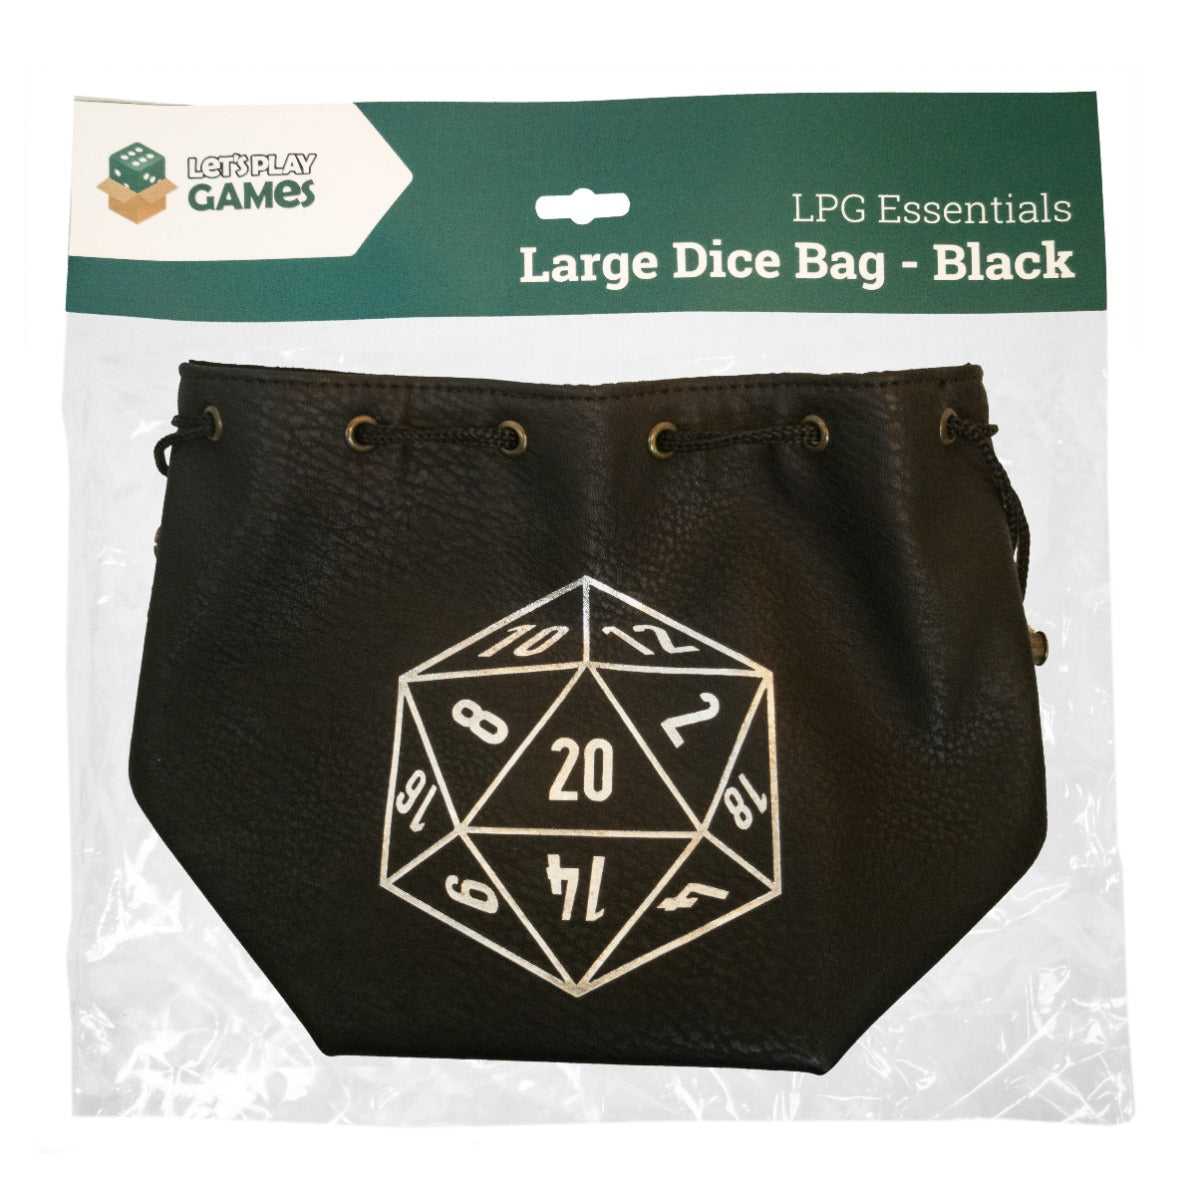 LPG Large Dice Bag Black